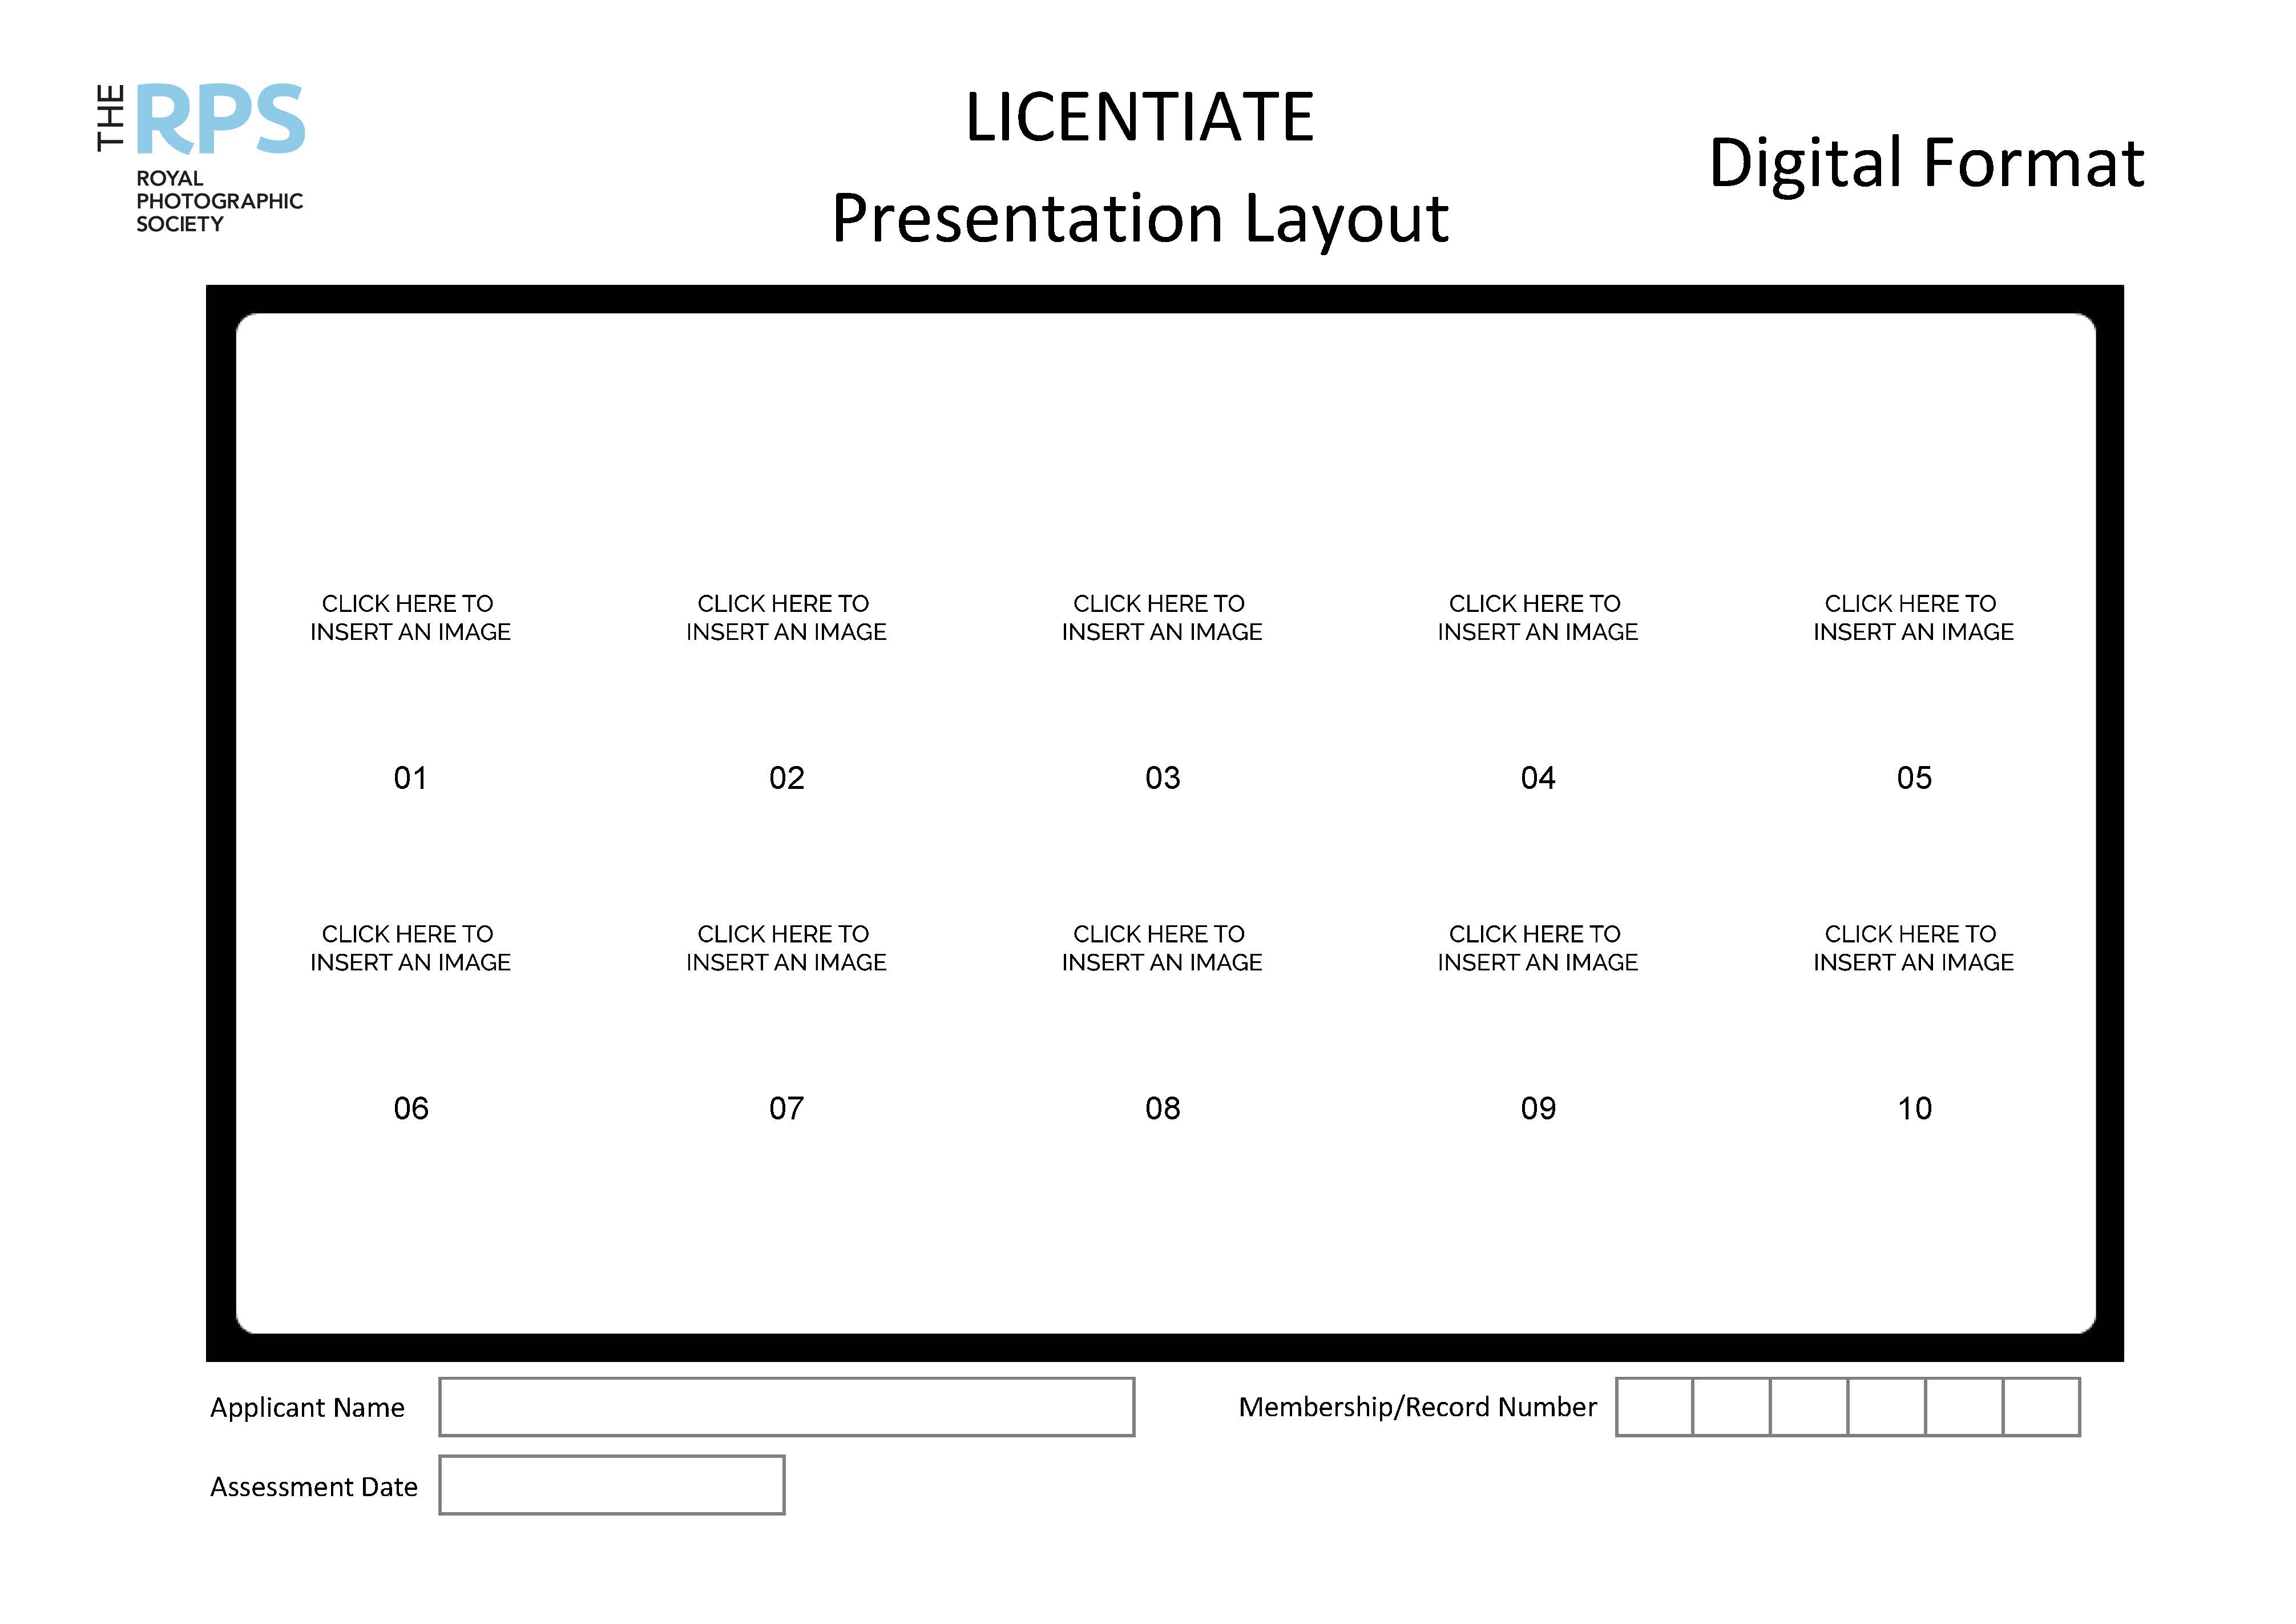 LRPS 2021 Presentation Layout 5 5 DIGITAL